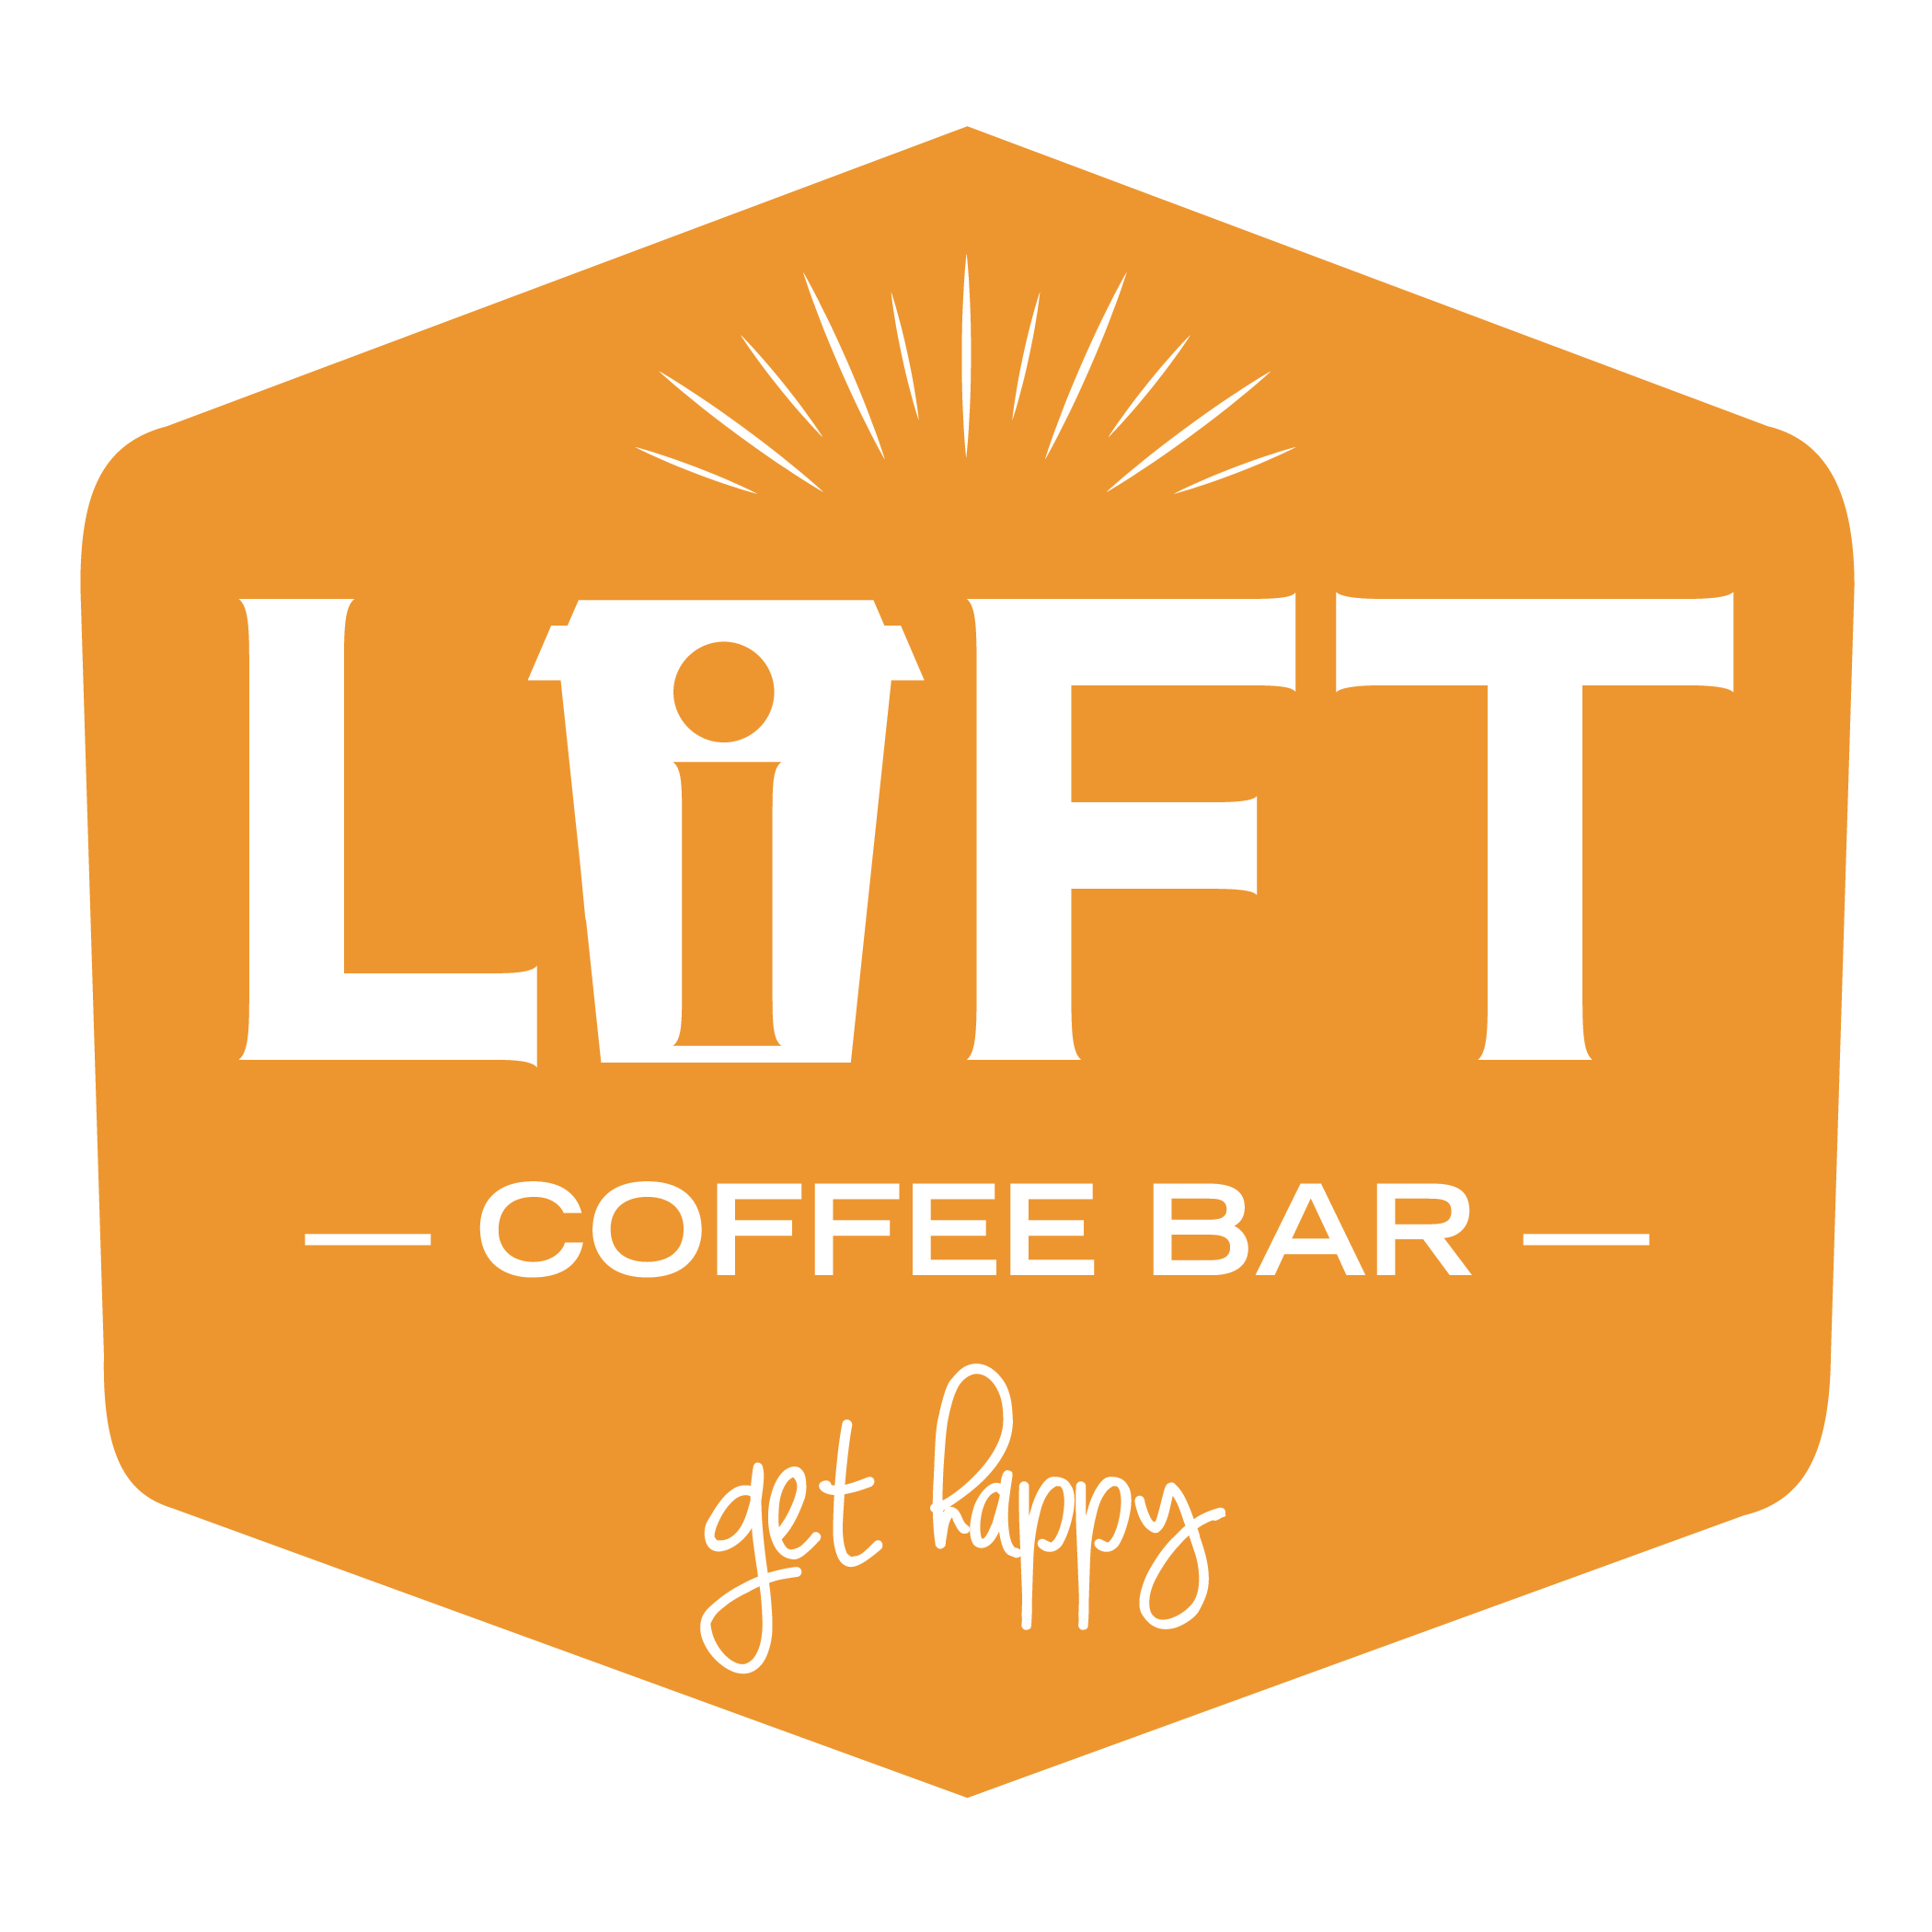 Lift Coffee Bar